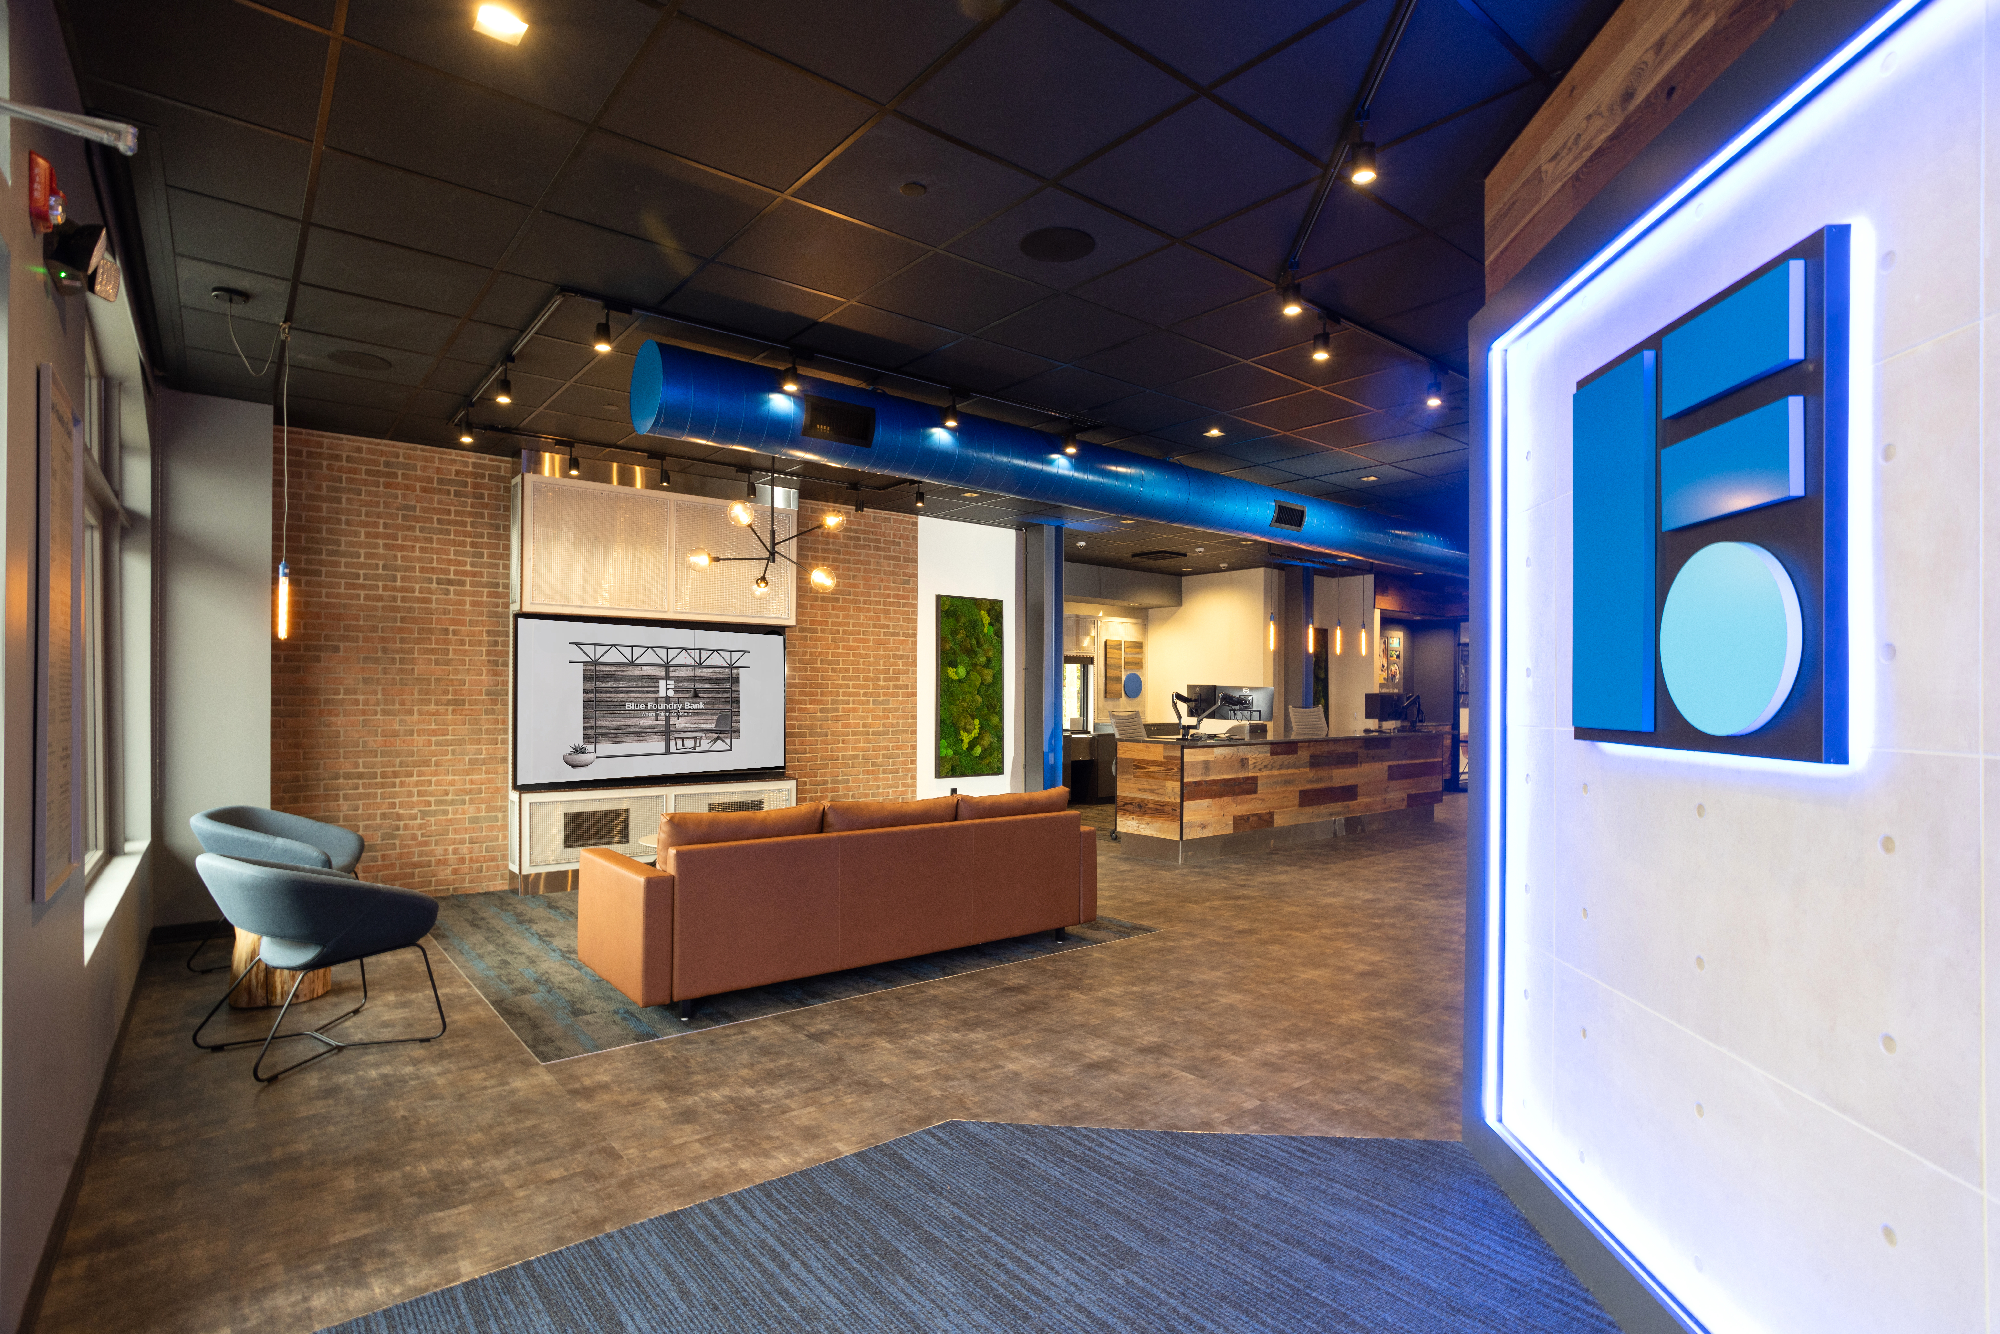 Blue Foundry Bank Opens New Branch Location in Dunellen, NJ